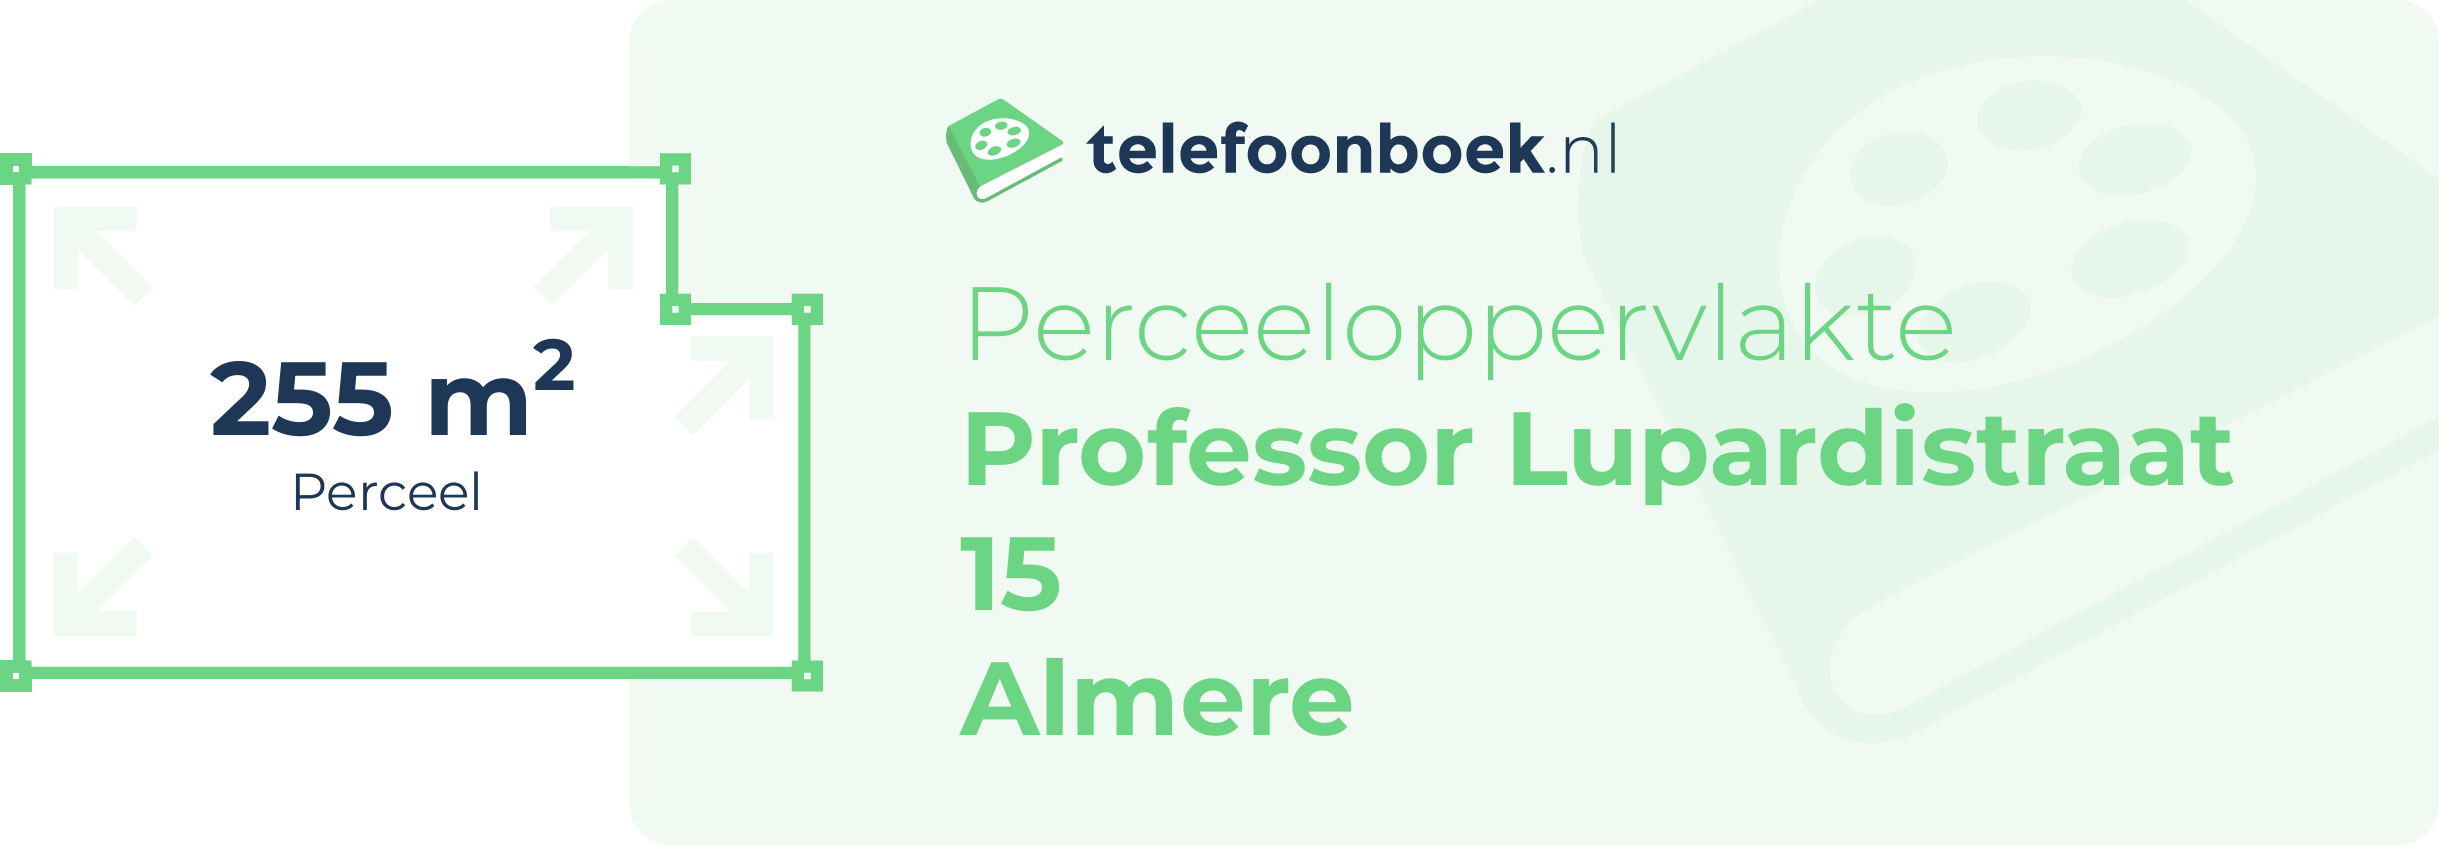 Perceeloppervlakte Professor Lupardistraat 15 Almere